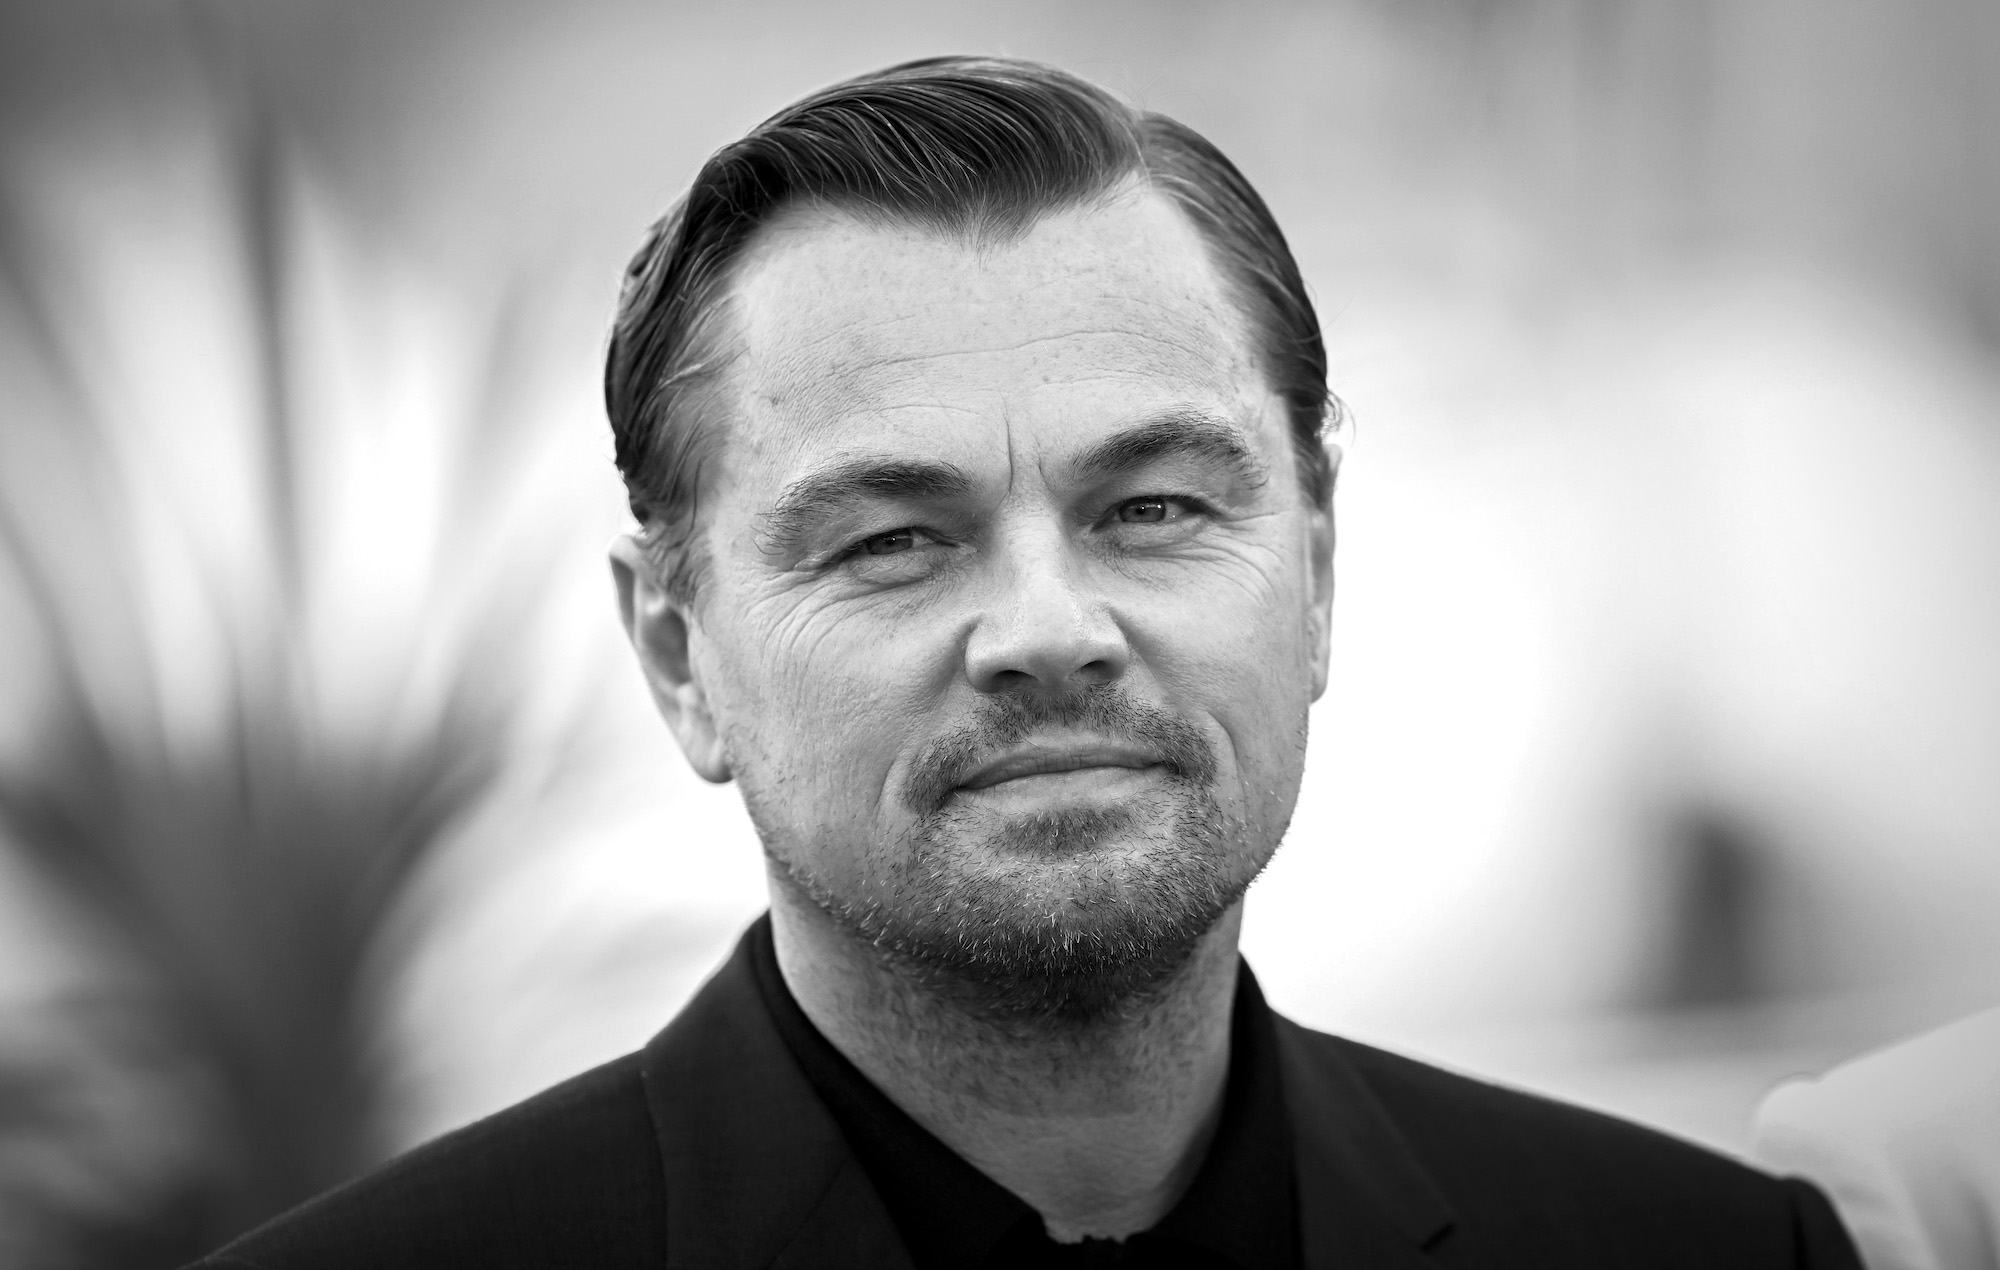 What is Leonardo DiCaprio's next movie?